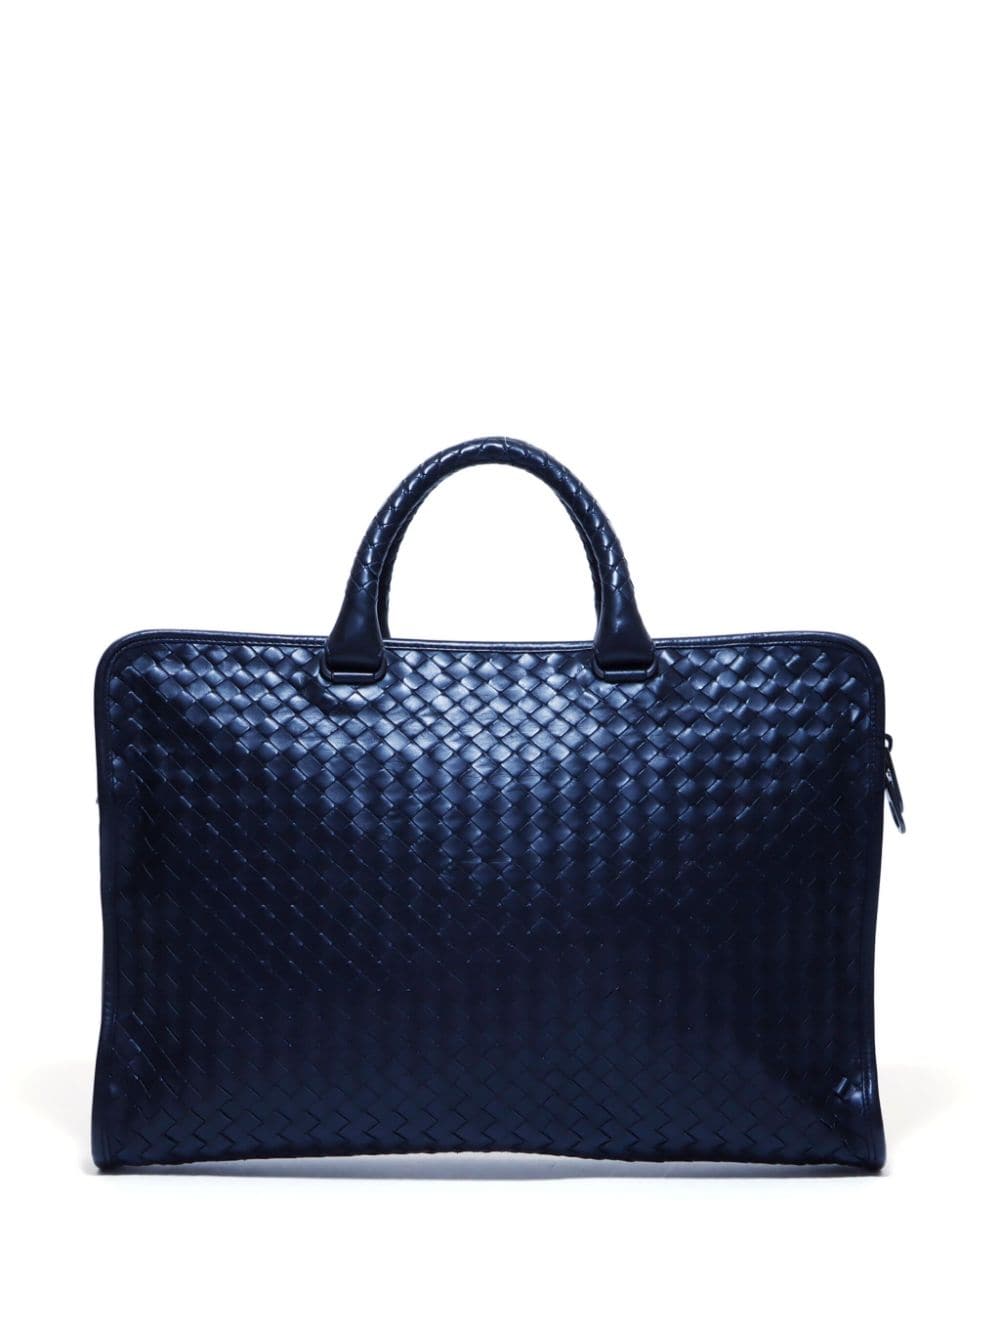 Bottega Veneta Pre-Owned Intrecciato leather two-way shoulder bag - Blauw